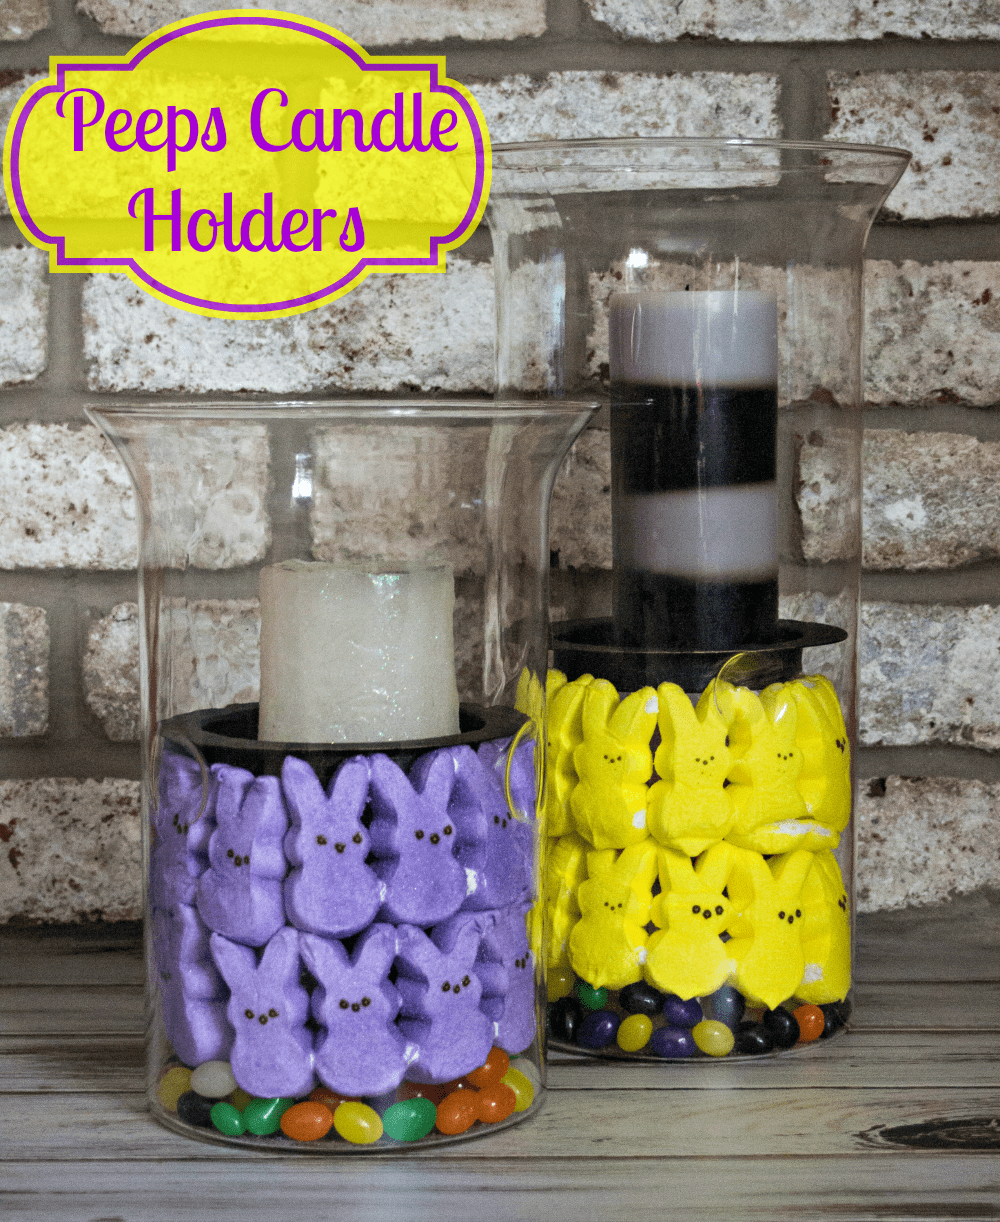 Easter-themed candle holders shaped like Peeps.